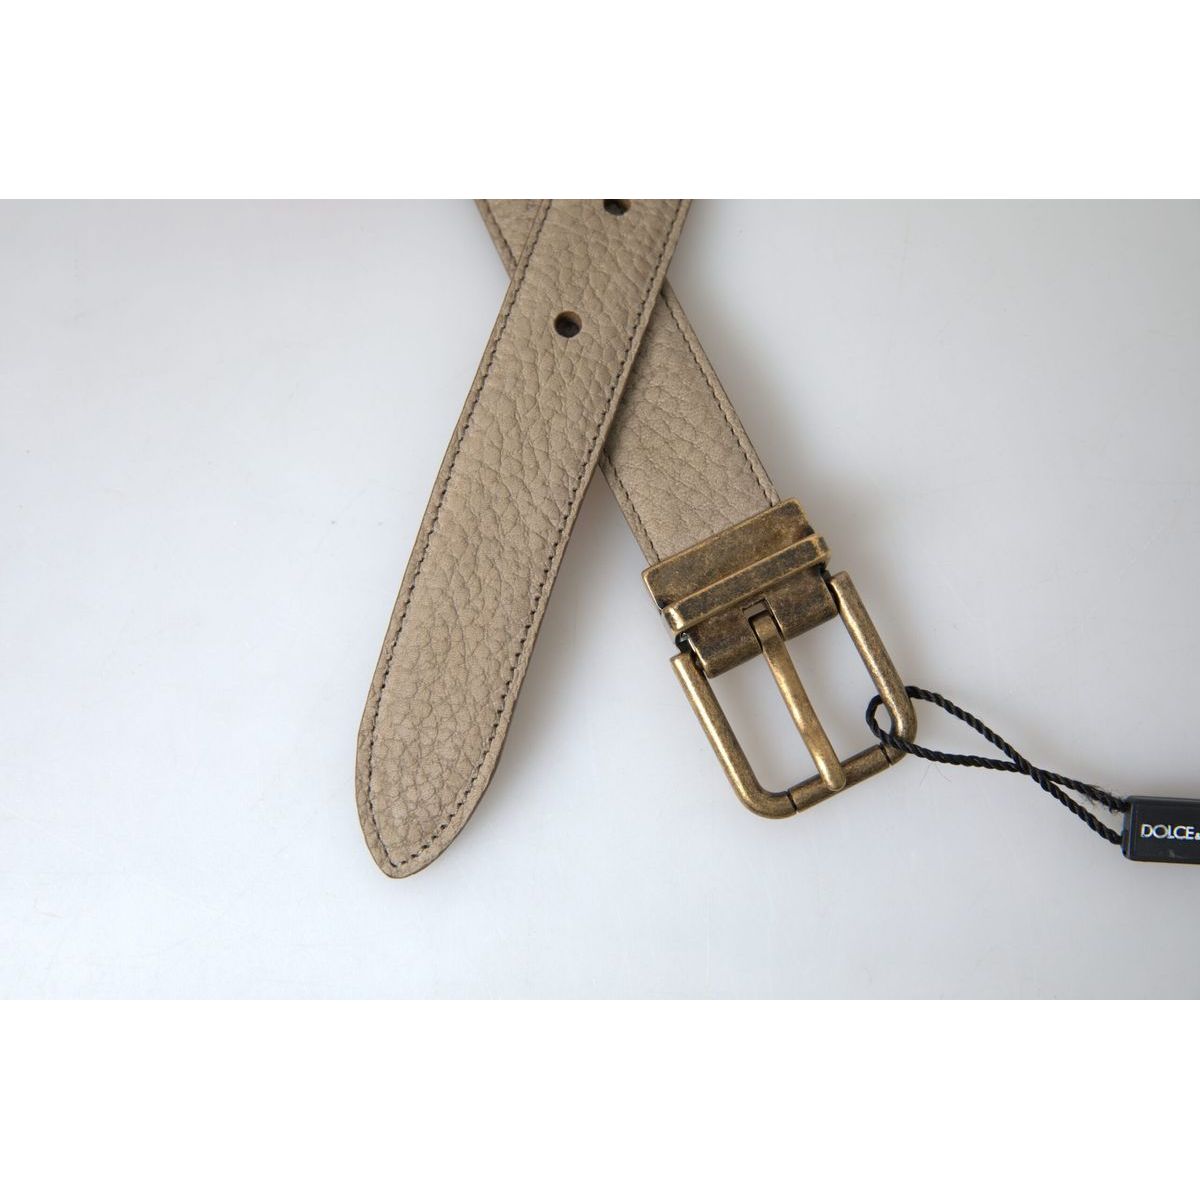 Dolce & Gabbana Elegant Beige Leather Belt with Metal Buckle beige-leather-gold-metal-buckle-men-belt